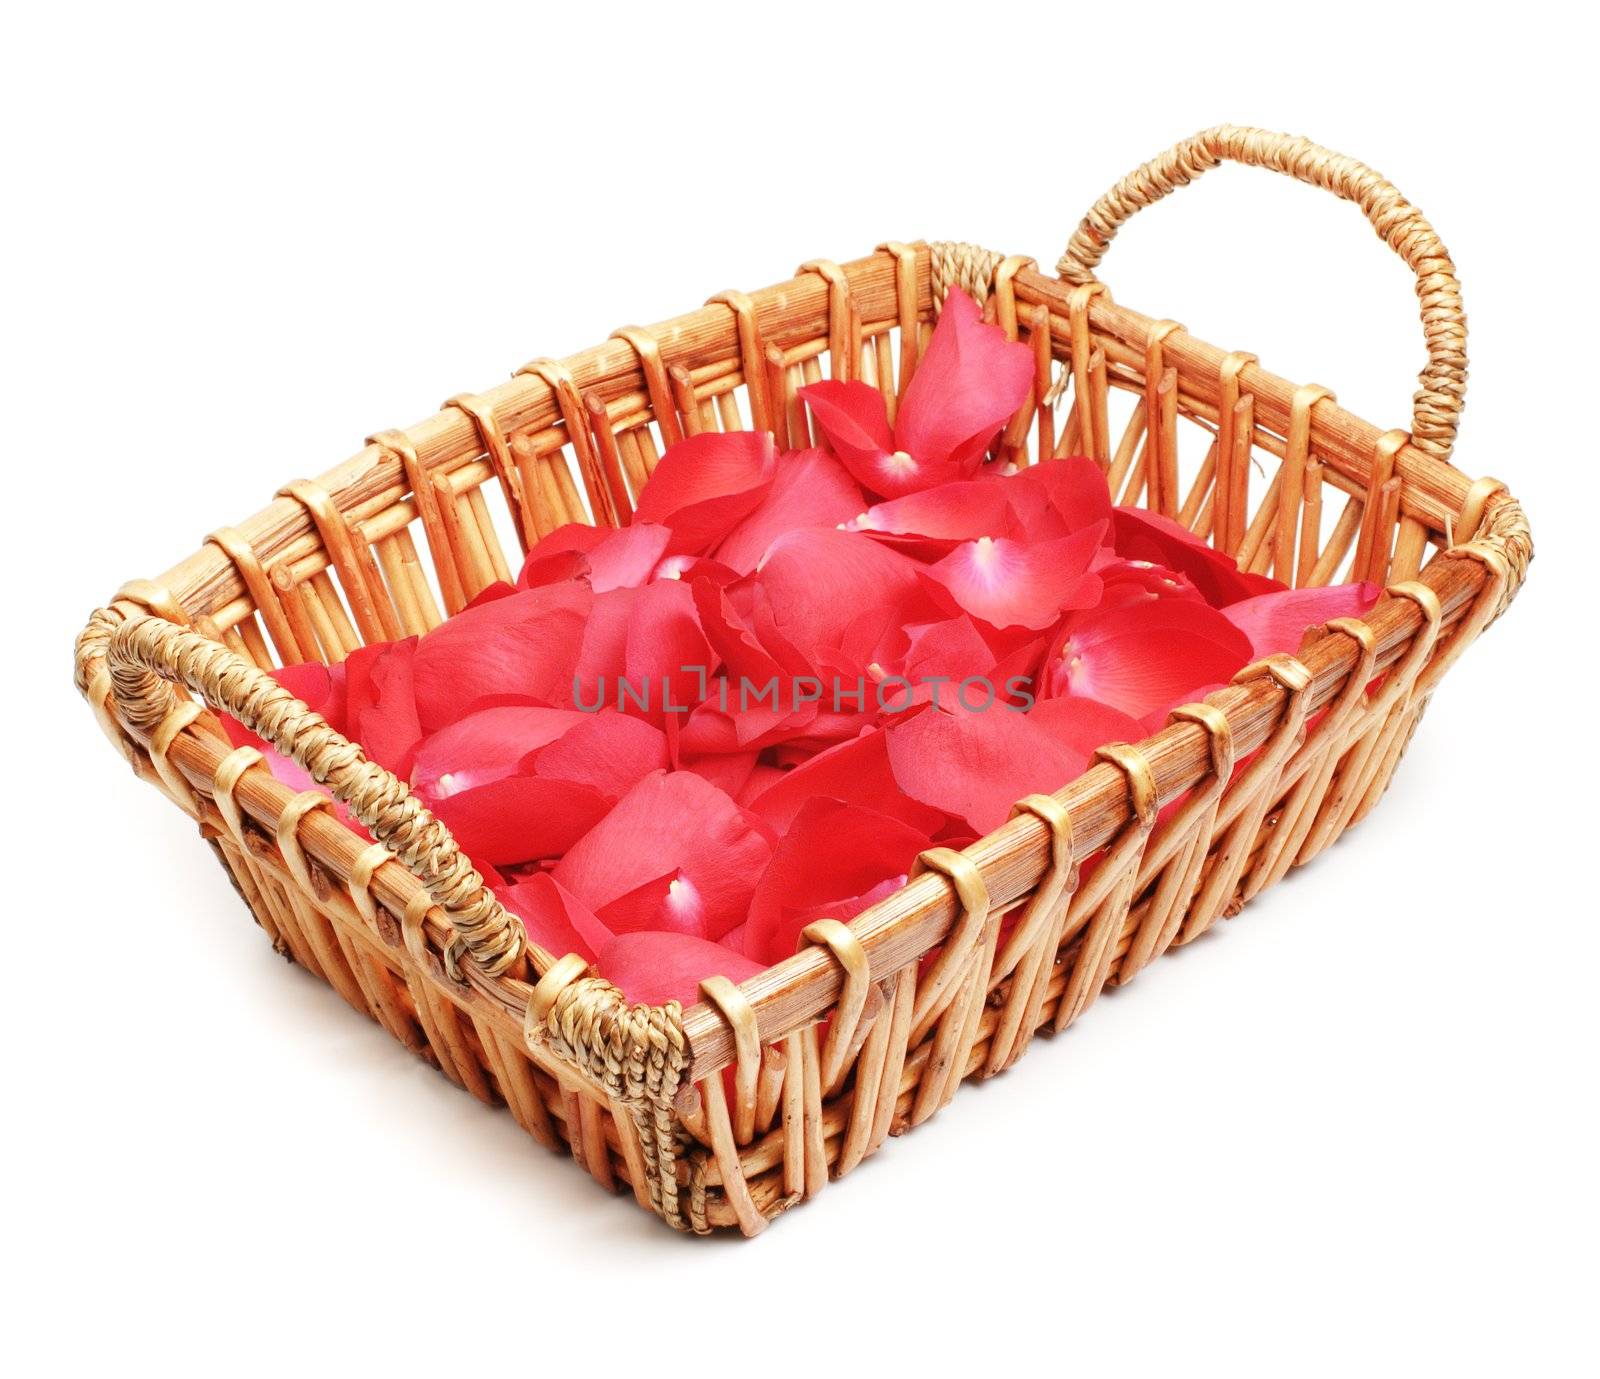 Basket full of rose petals on display against white.